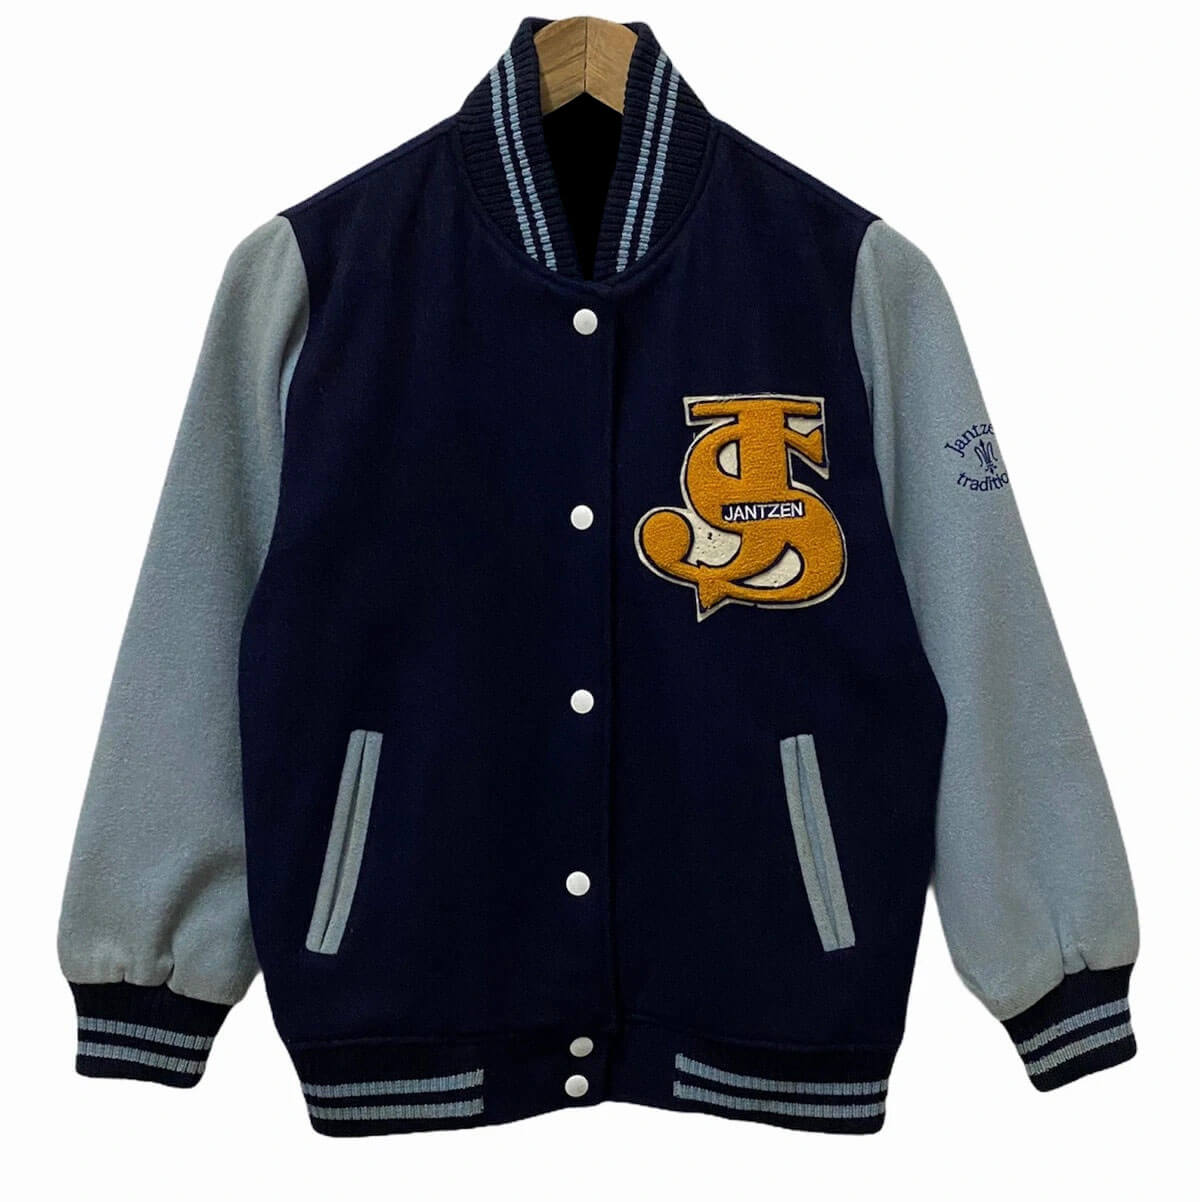 Vintage Jantzen Travis Kanye Style Varsity Jacket - Maker of Jacket